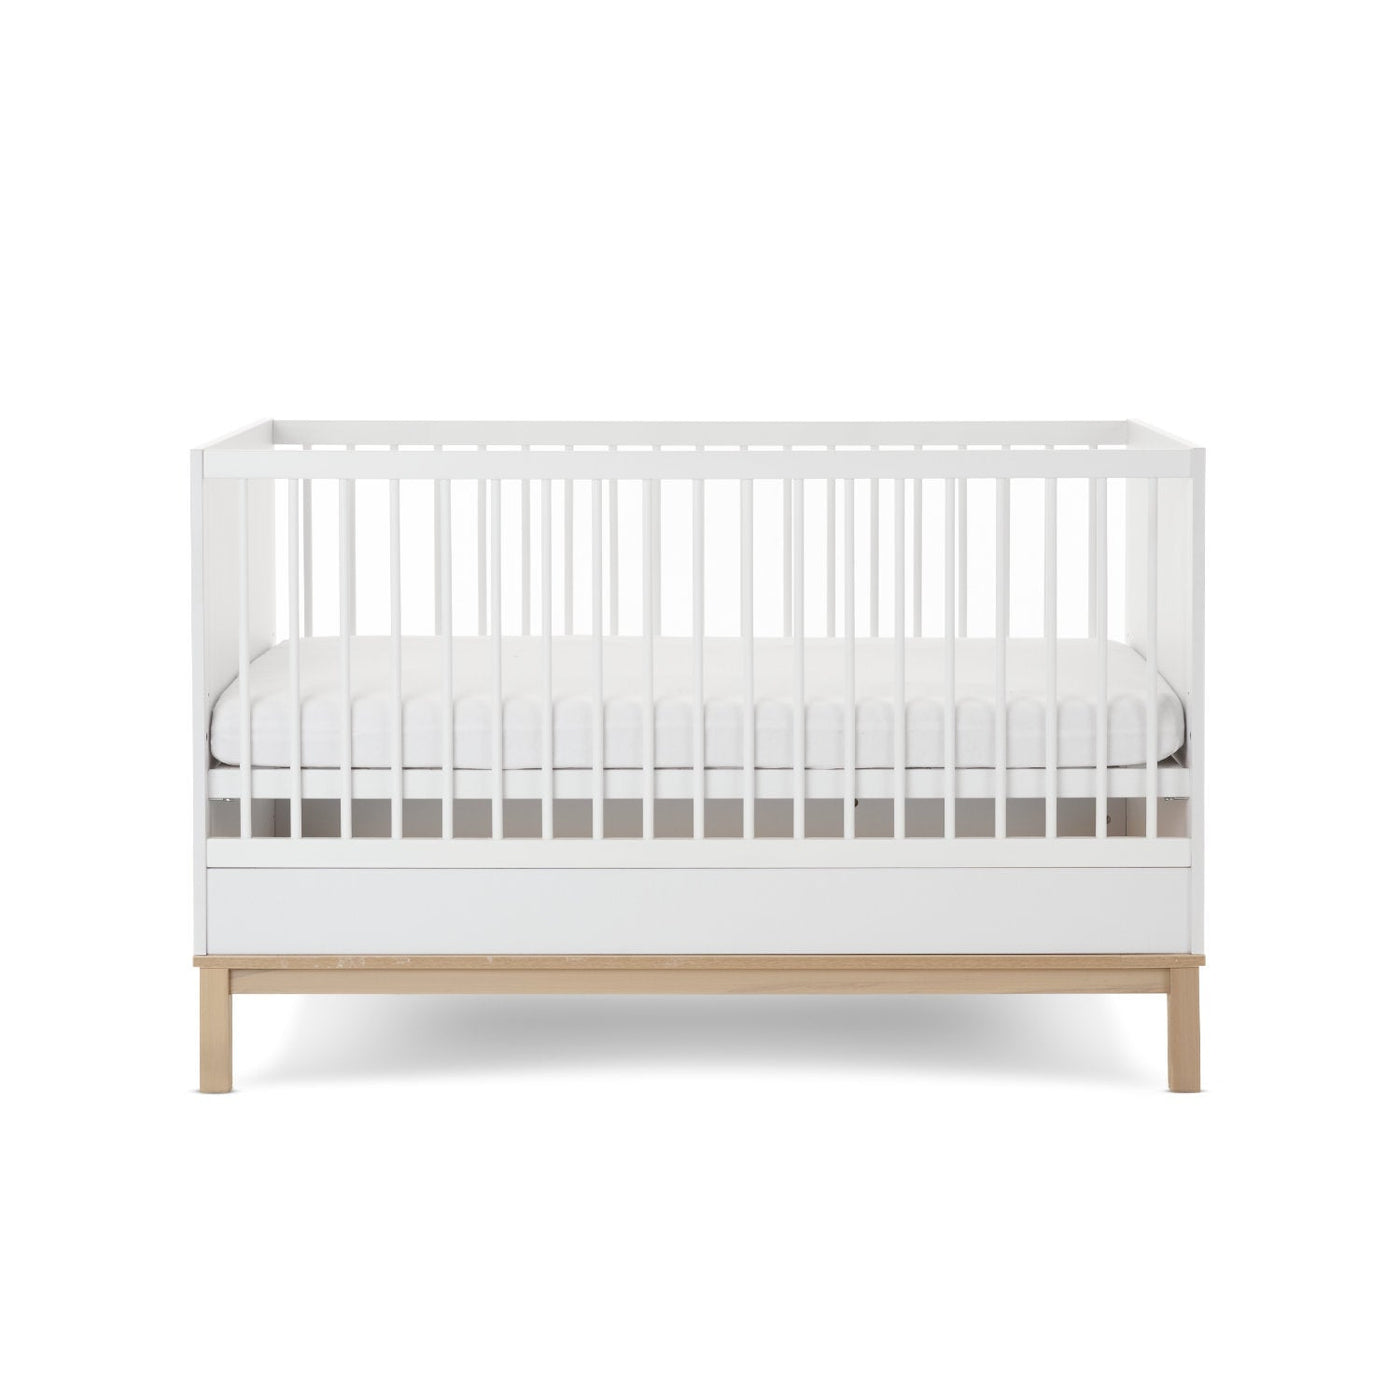 Astrid 3 Piece Room Set - White-Baby & Toddler Furniture Sets-OBABY-Yes Bebe